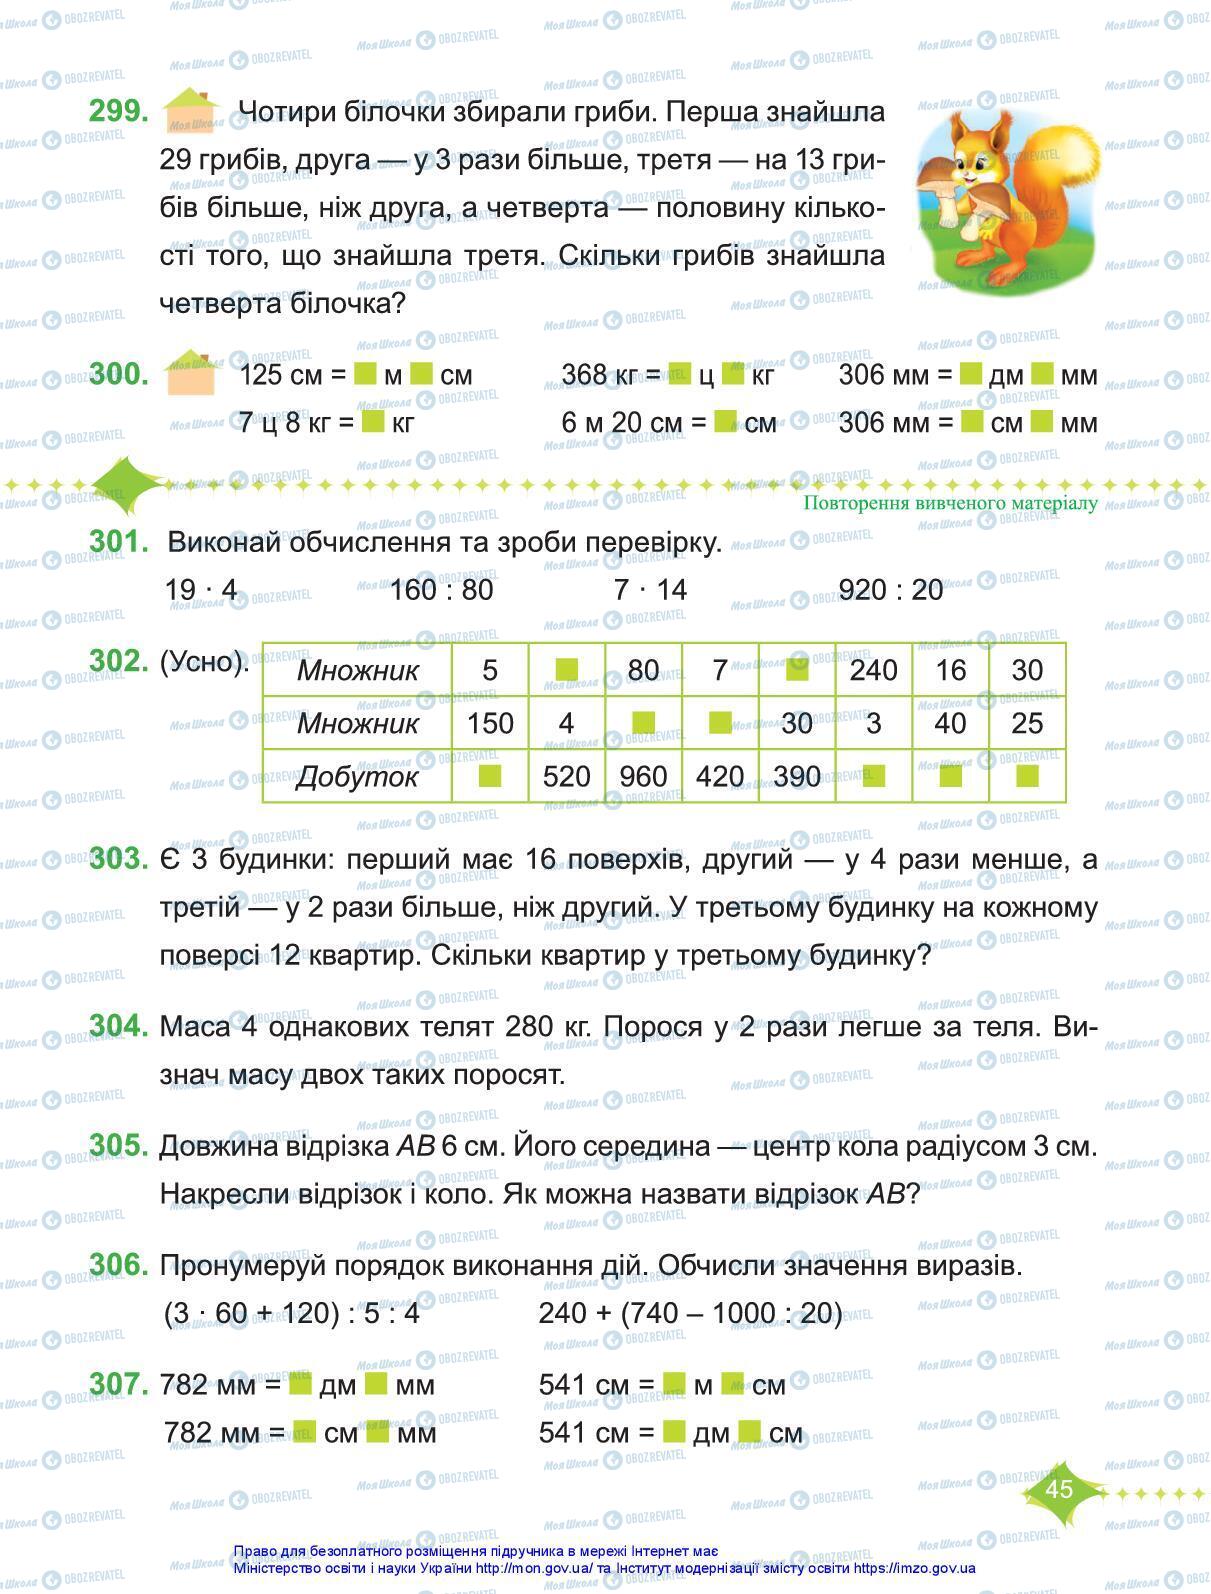 Учебники Математика 3 класс страница 45